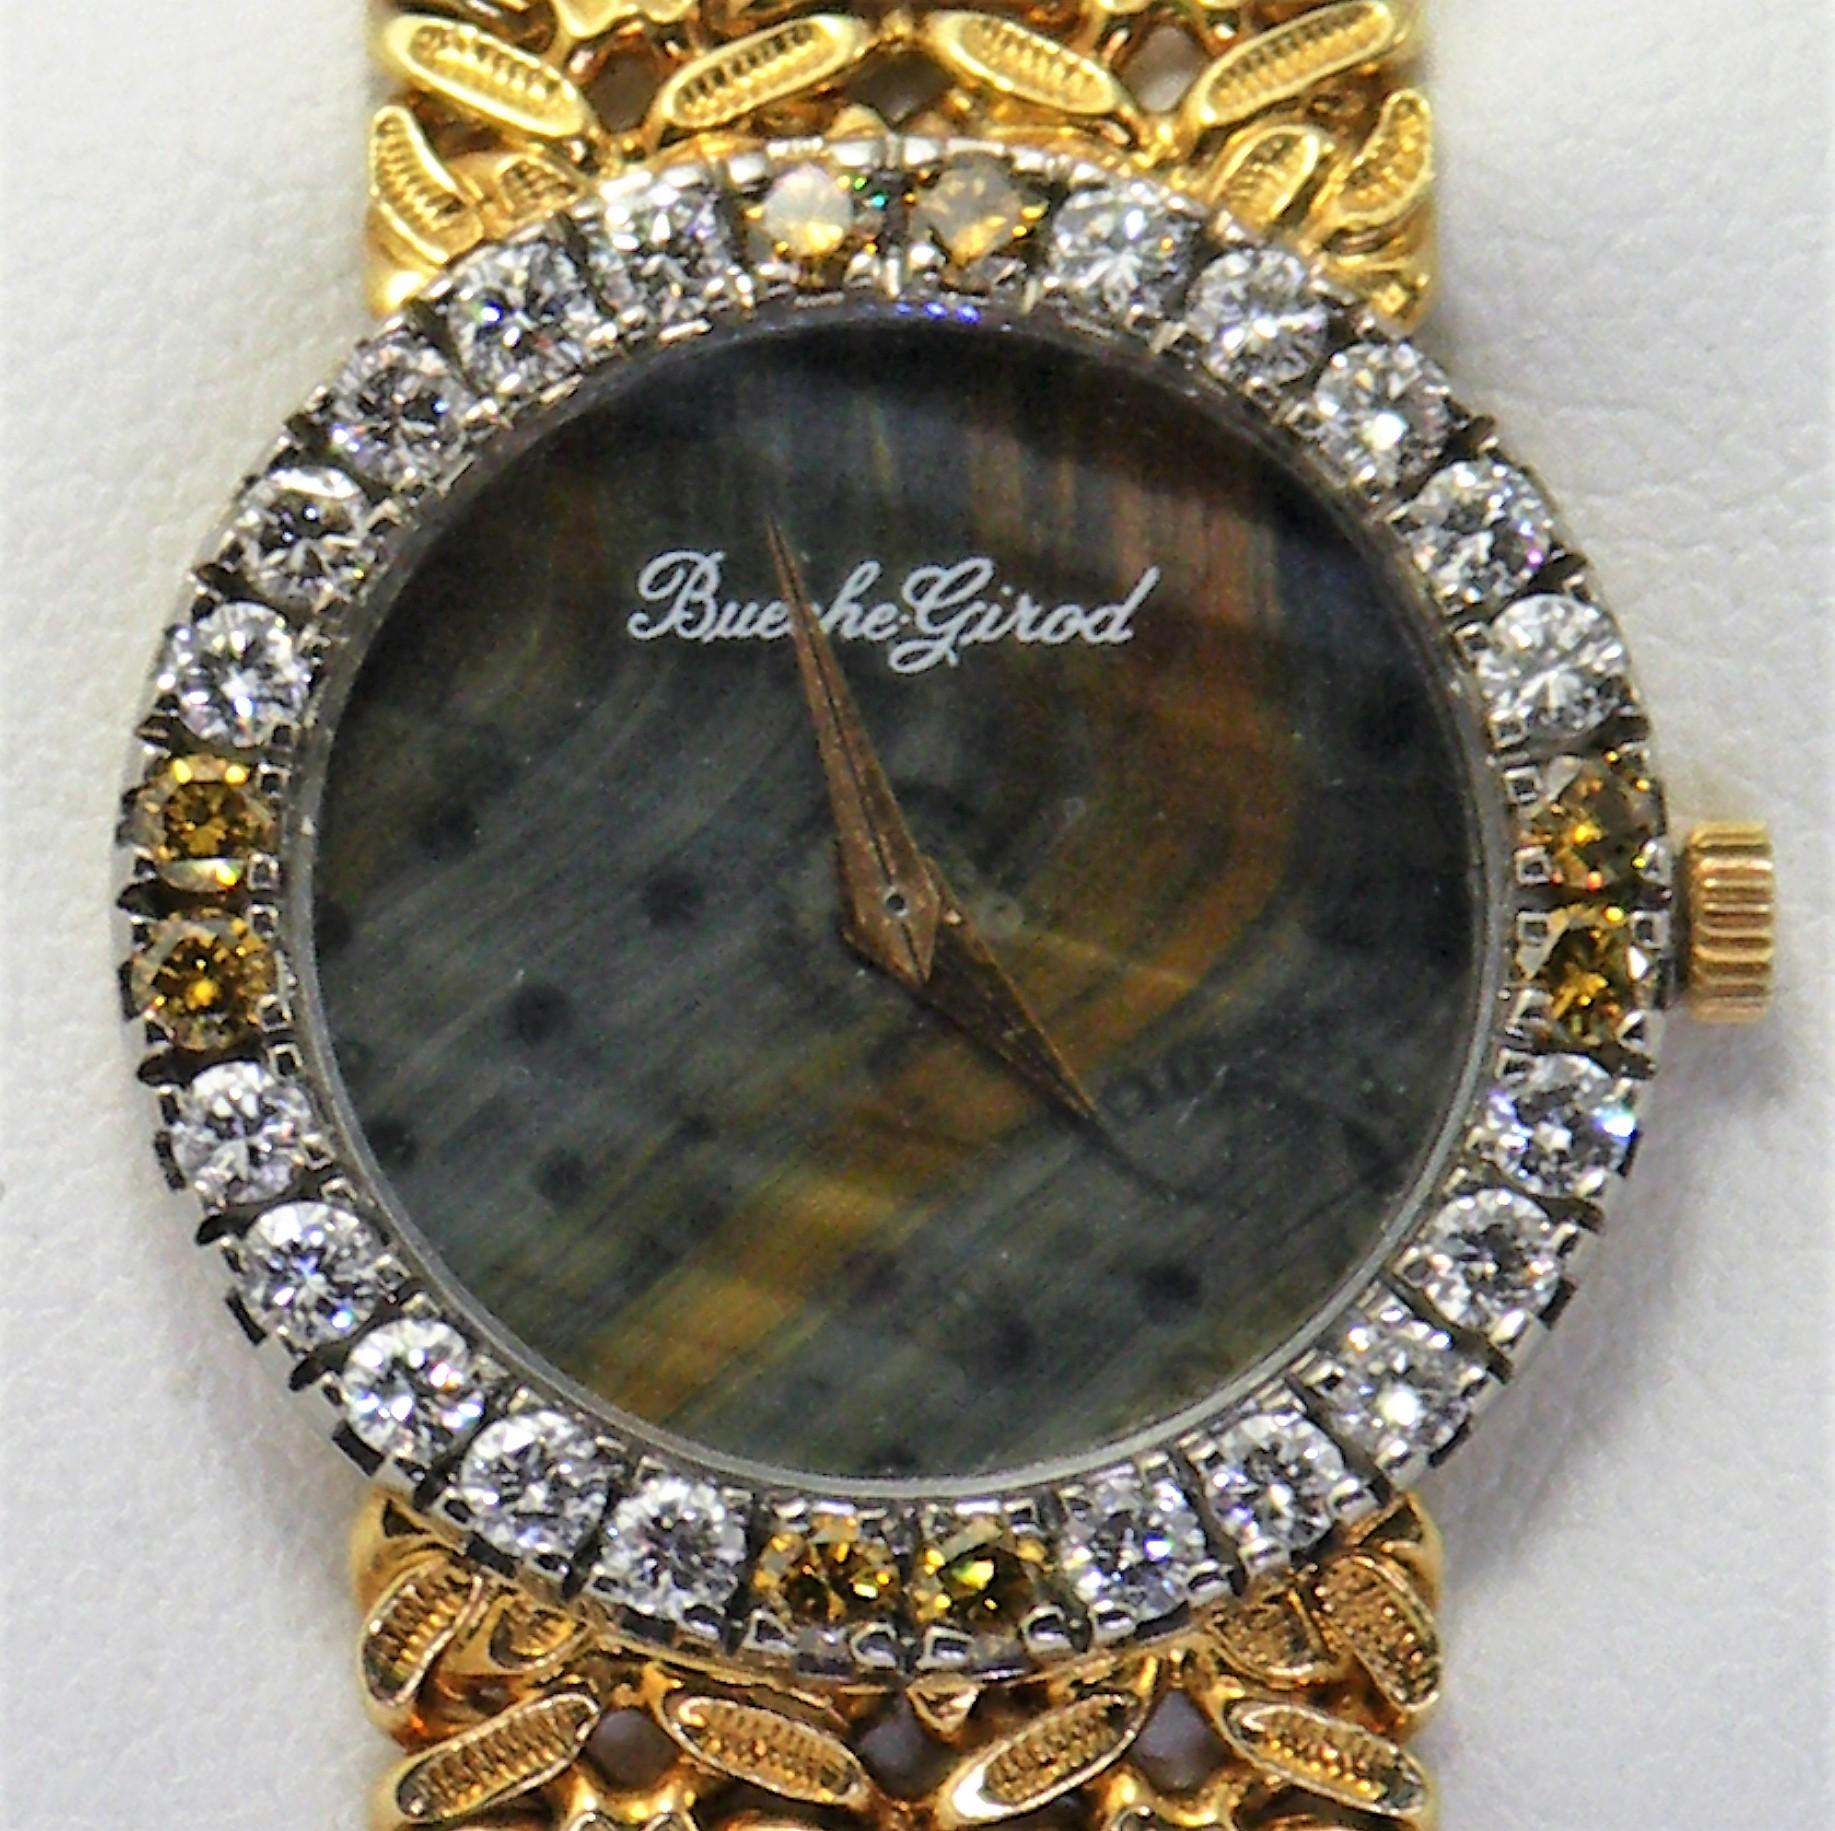 bueche girod diamond watch